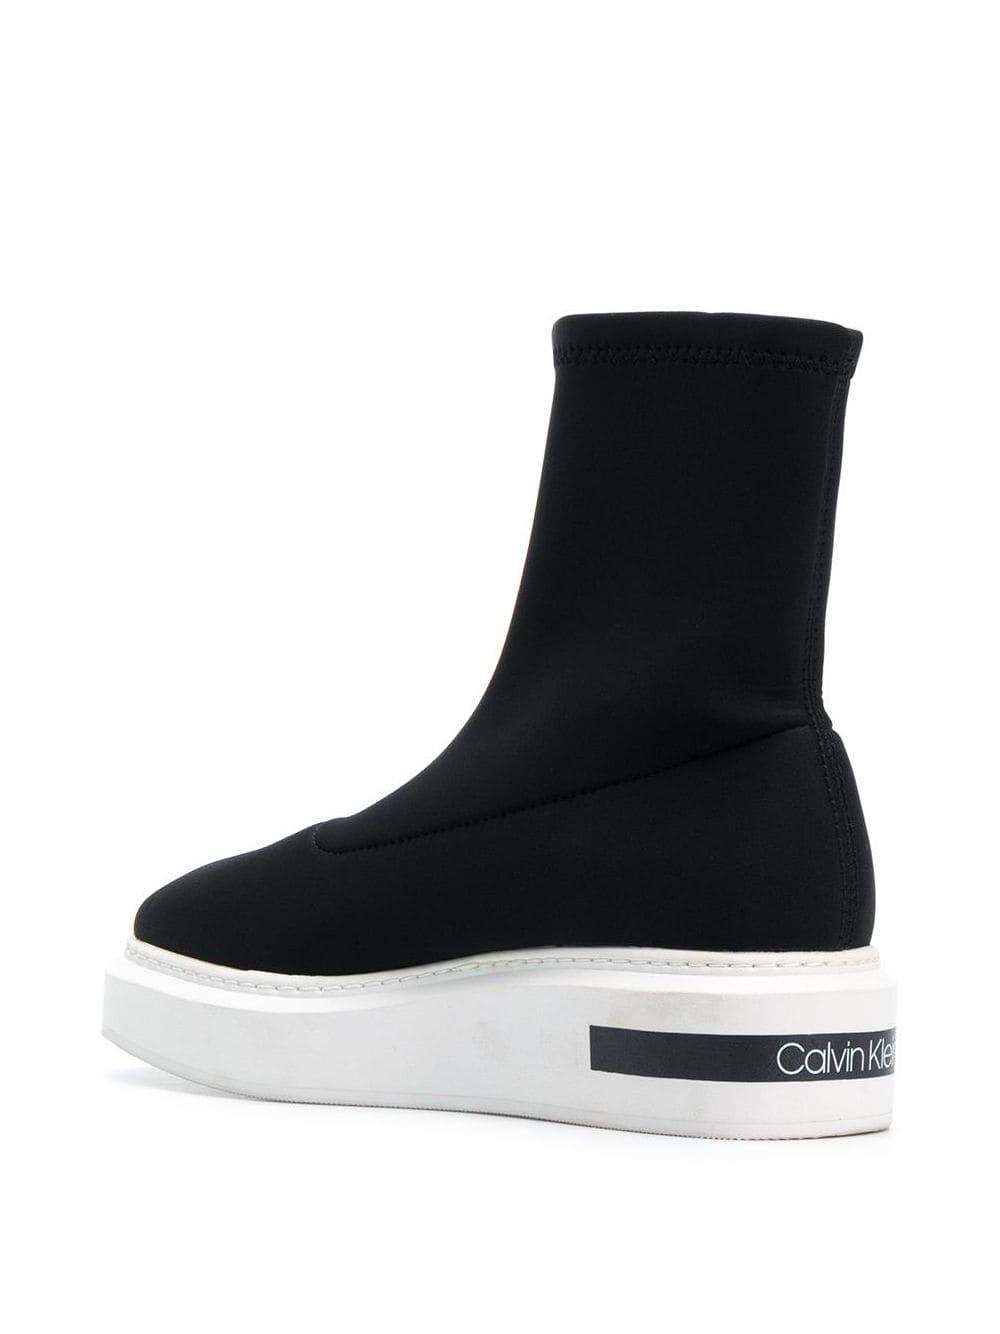 Calvin Klein Neoprene Boots in Black - Lyst